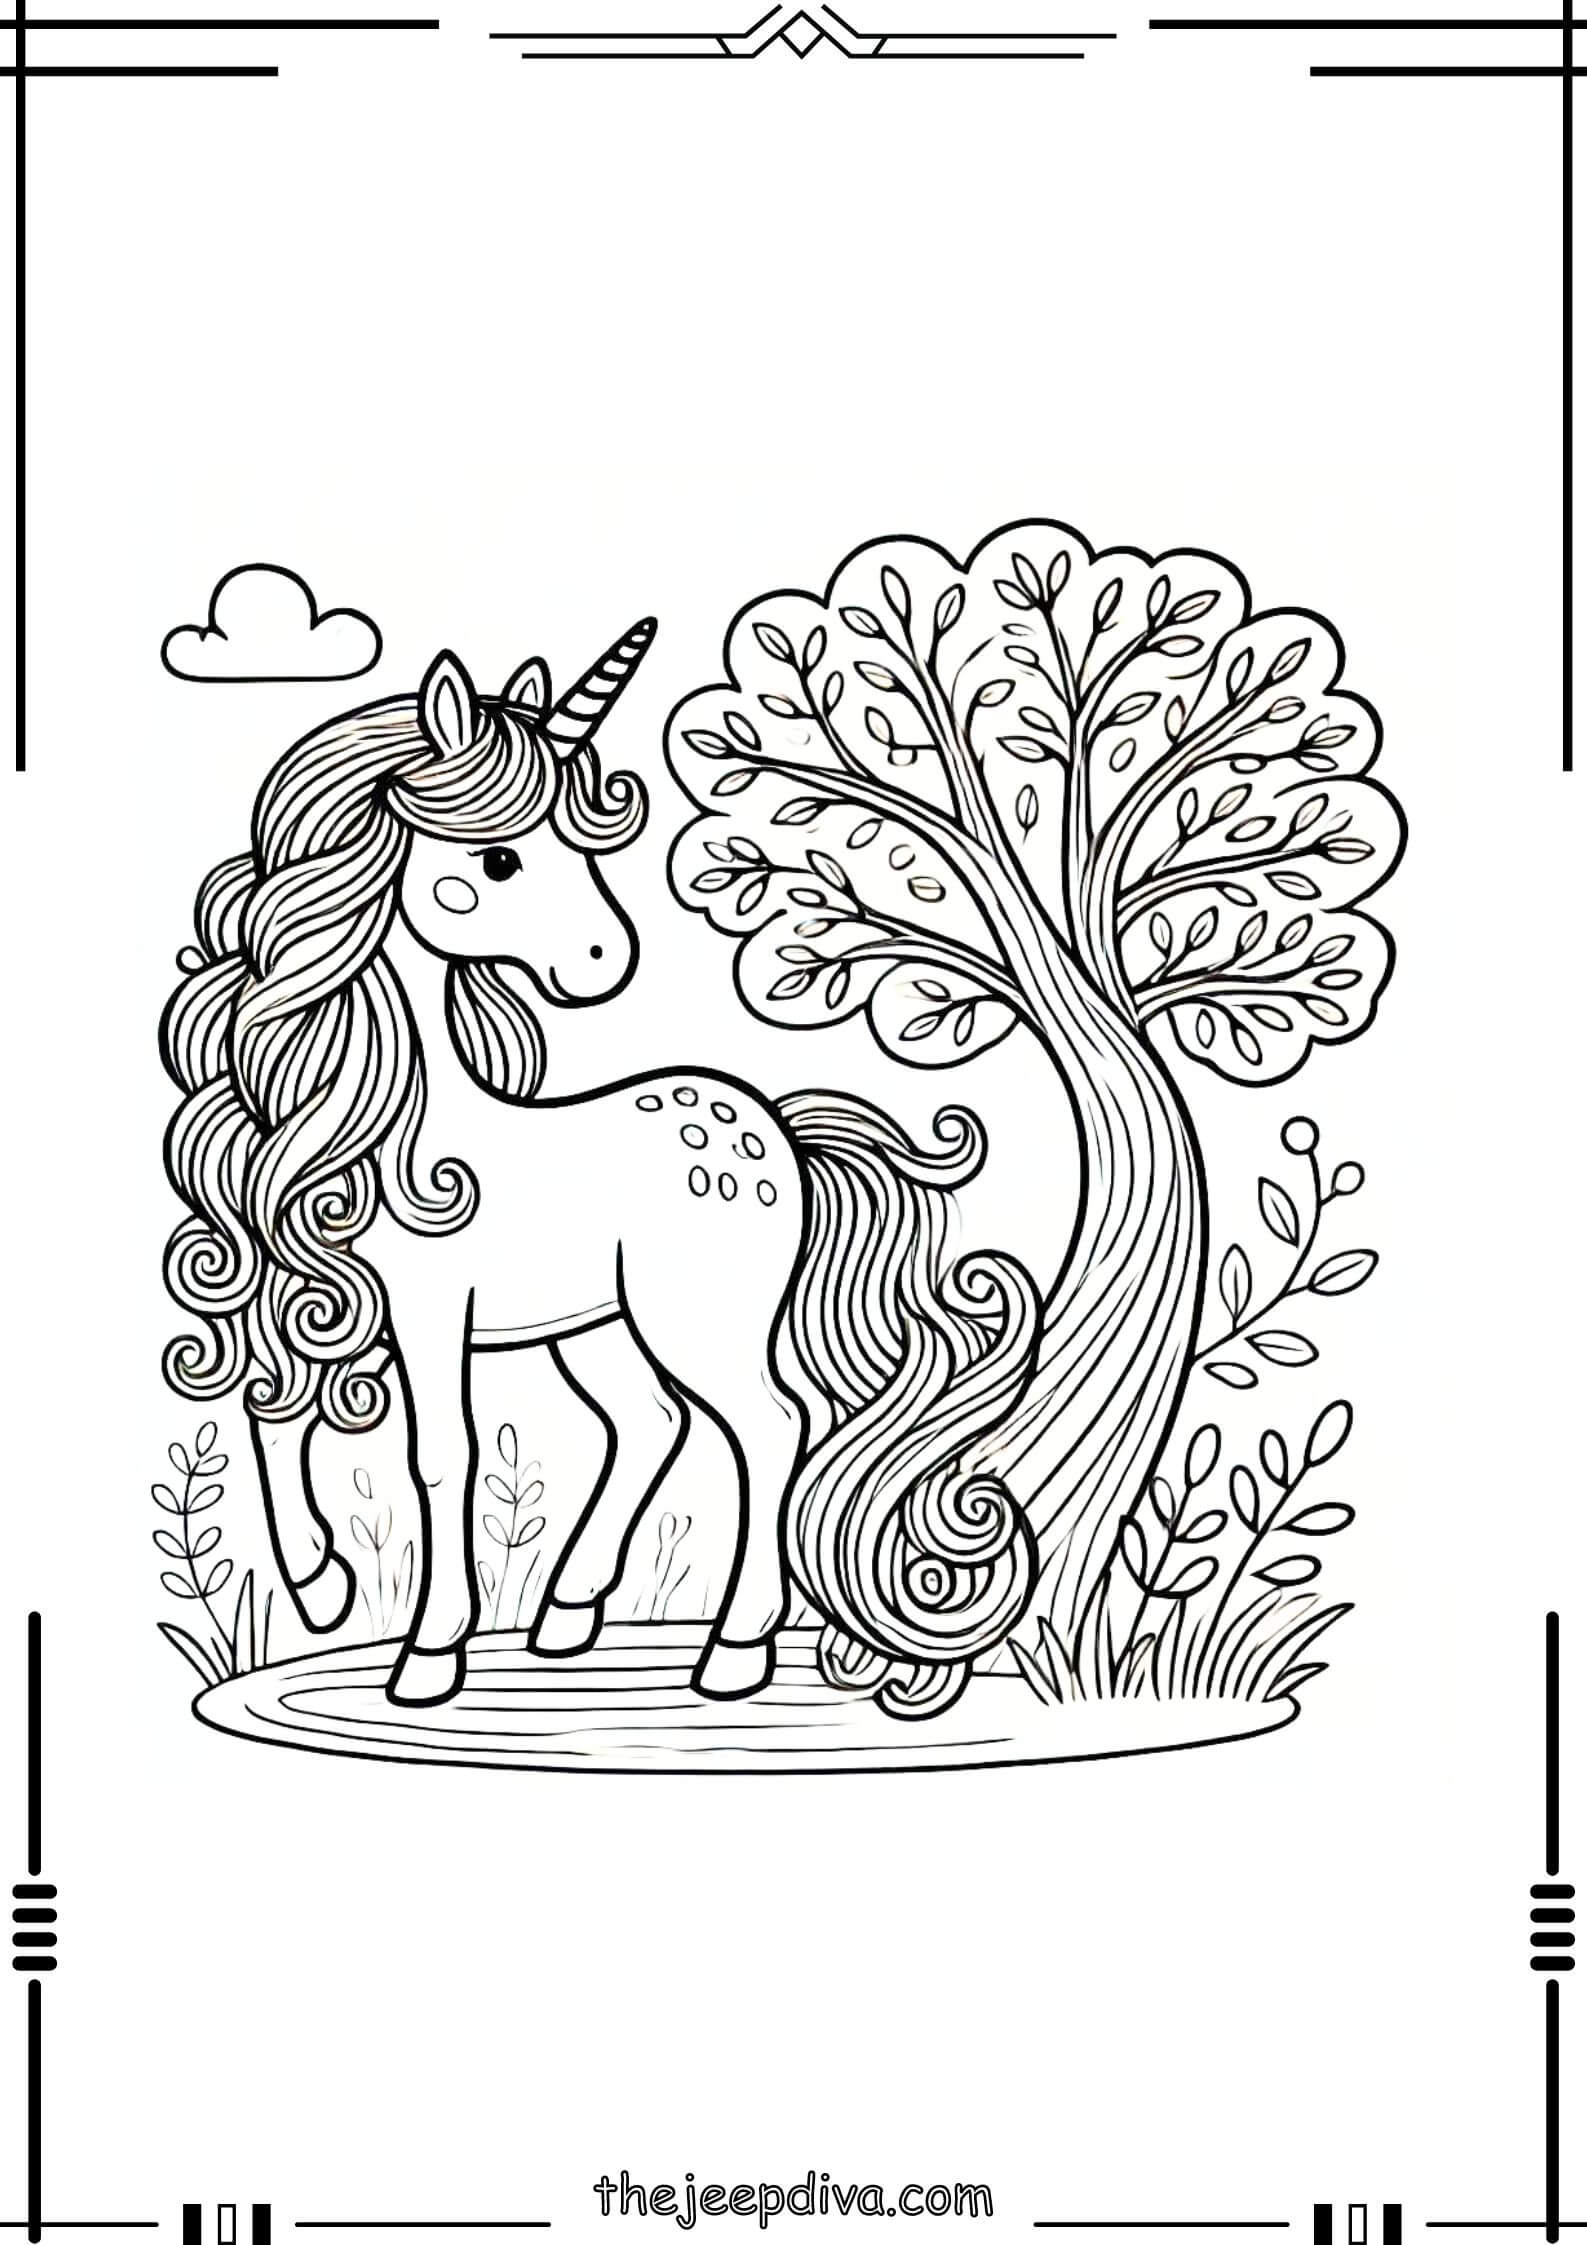 unicorn-coloring-page-medium-3